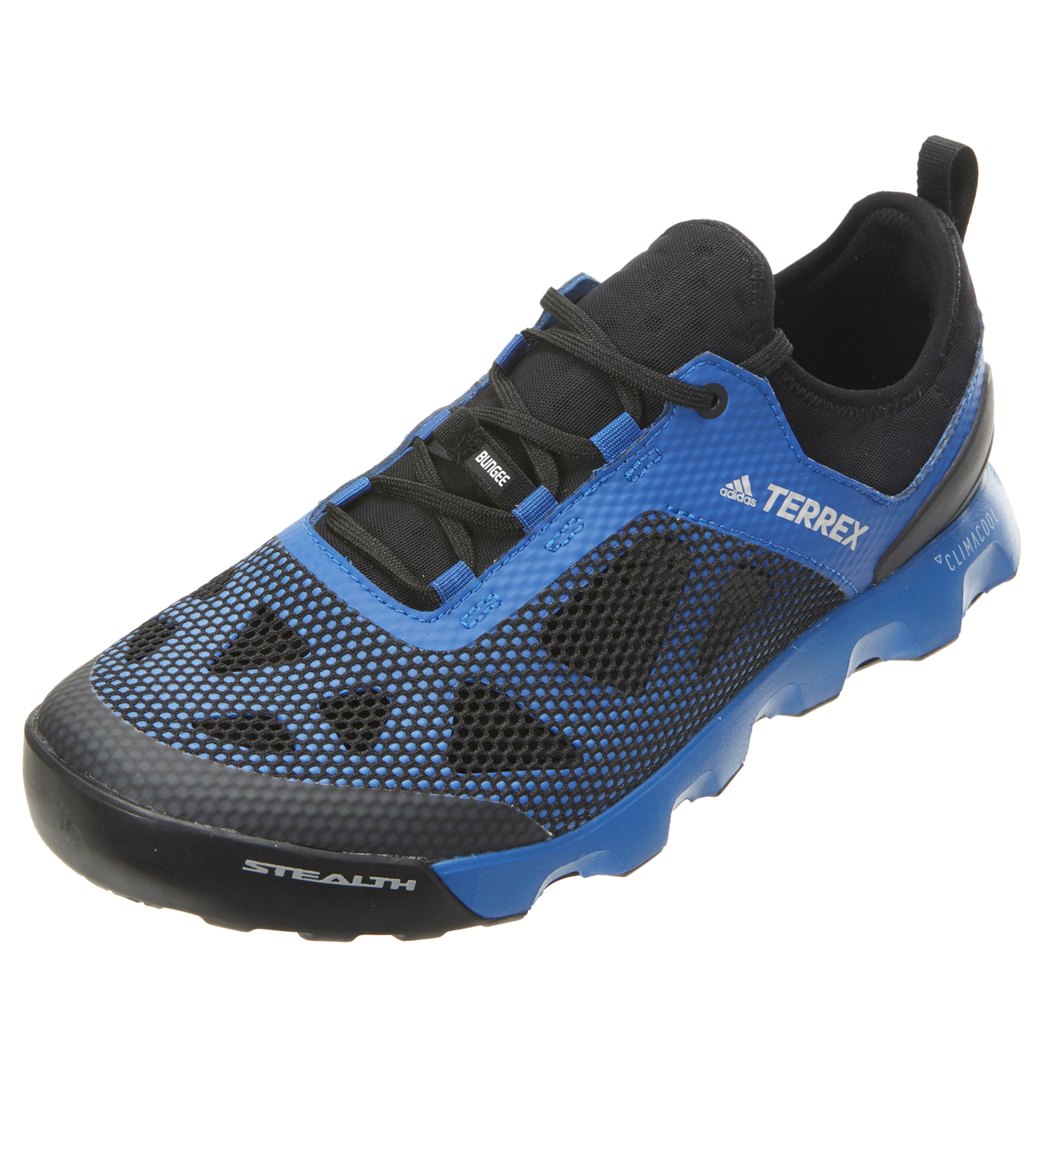 Adidas Men's Terrex Climacool Voyager Aqua Water Shoe at SwimOutlet.com